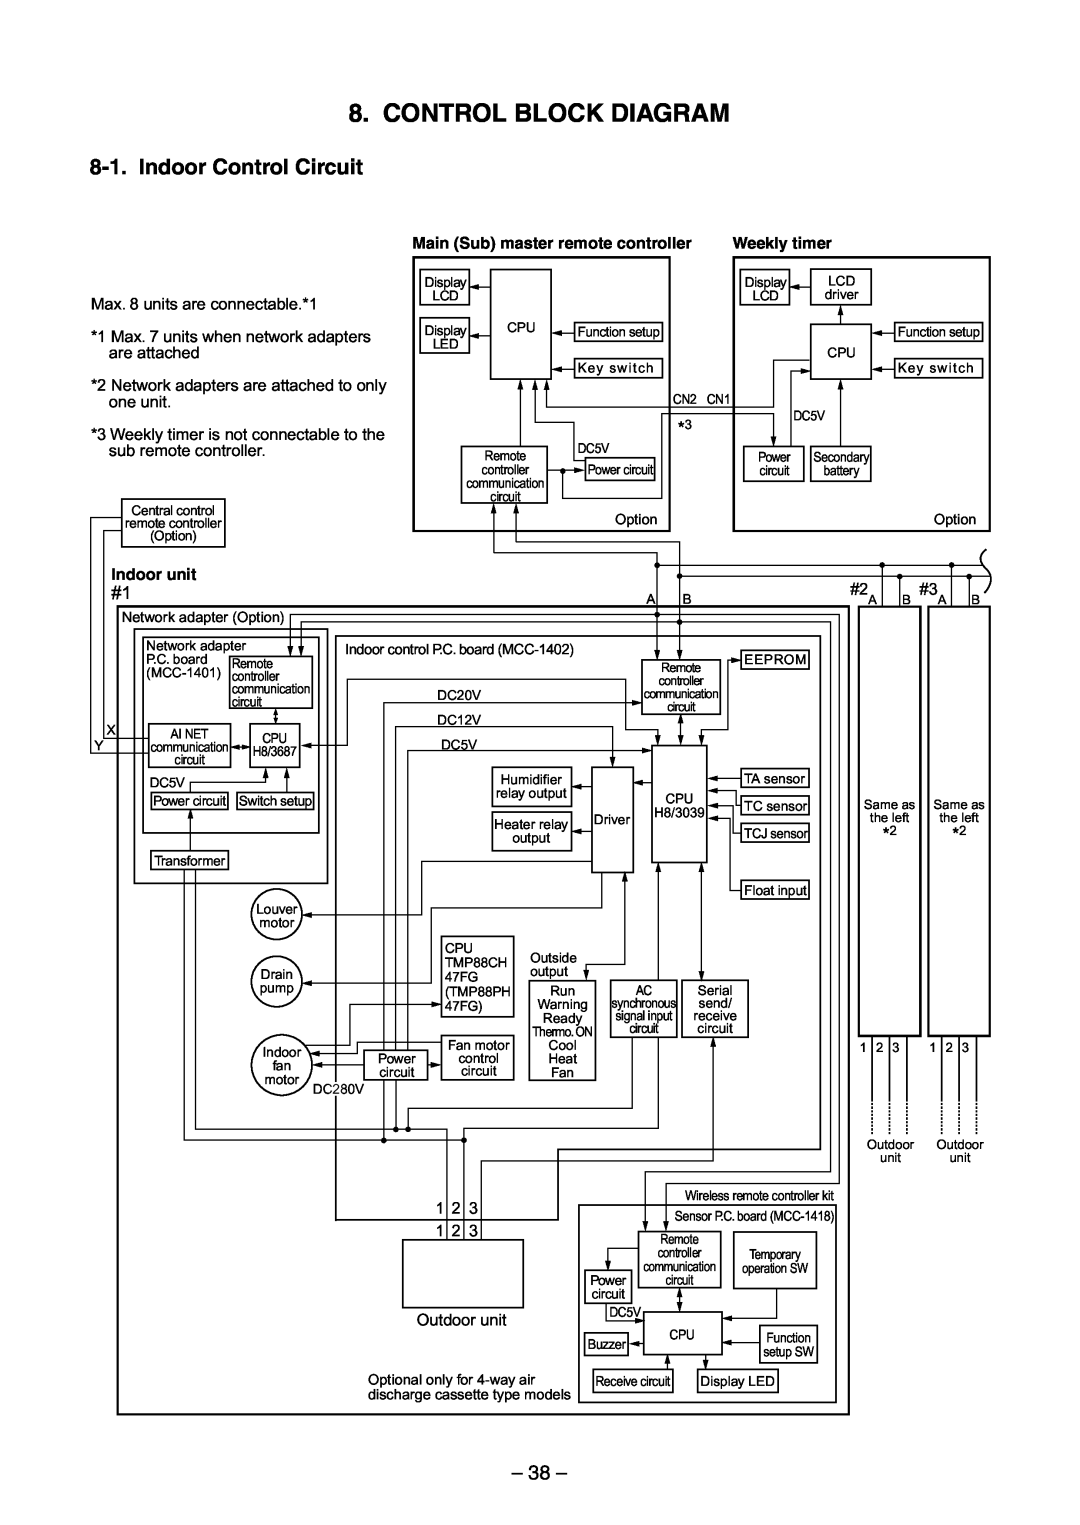 Toshiba RAV-SM560UT-E, RAV-SM800AT-E, RAV-SM800UT-E, RAV-SM560AT-E Control Block Diagram, Indoor Control Circuit, 38 